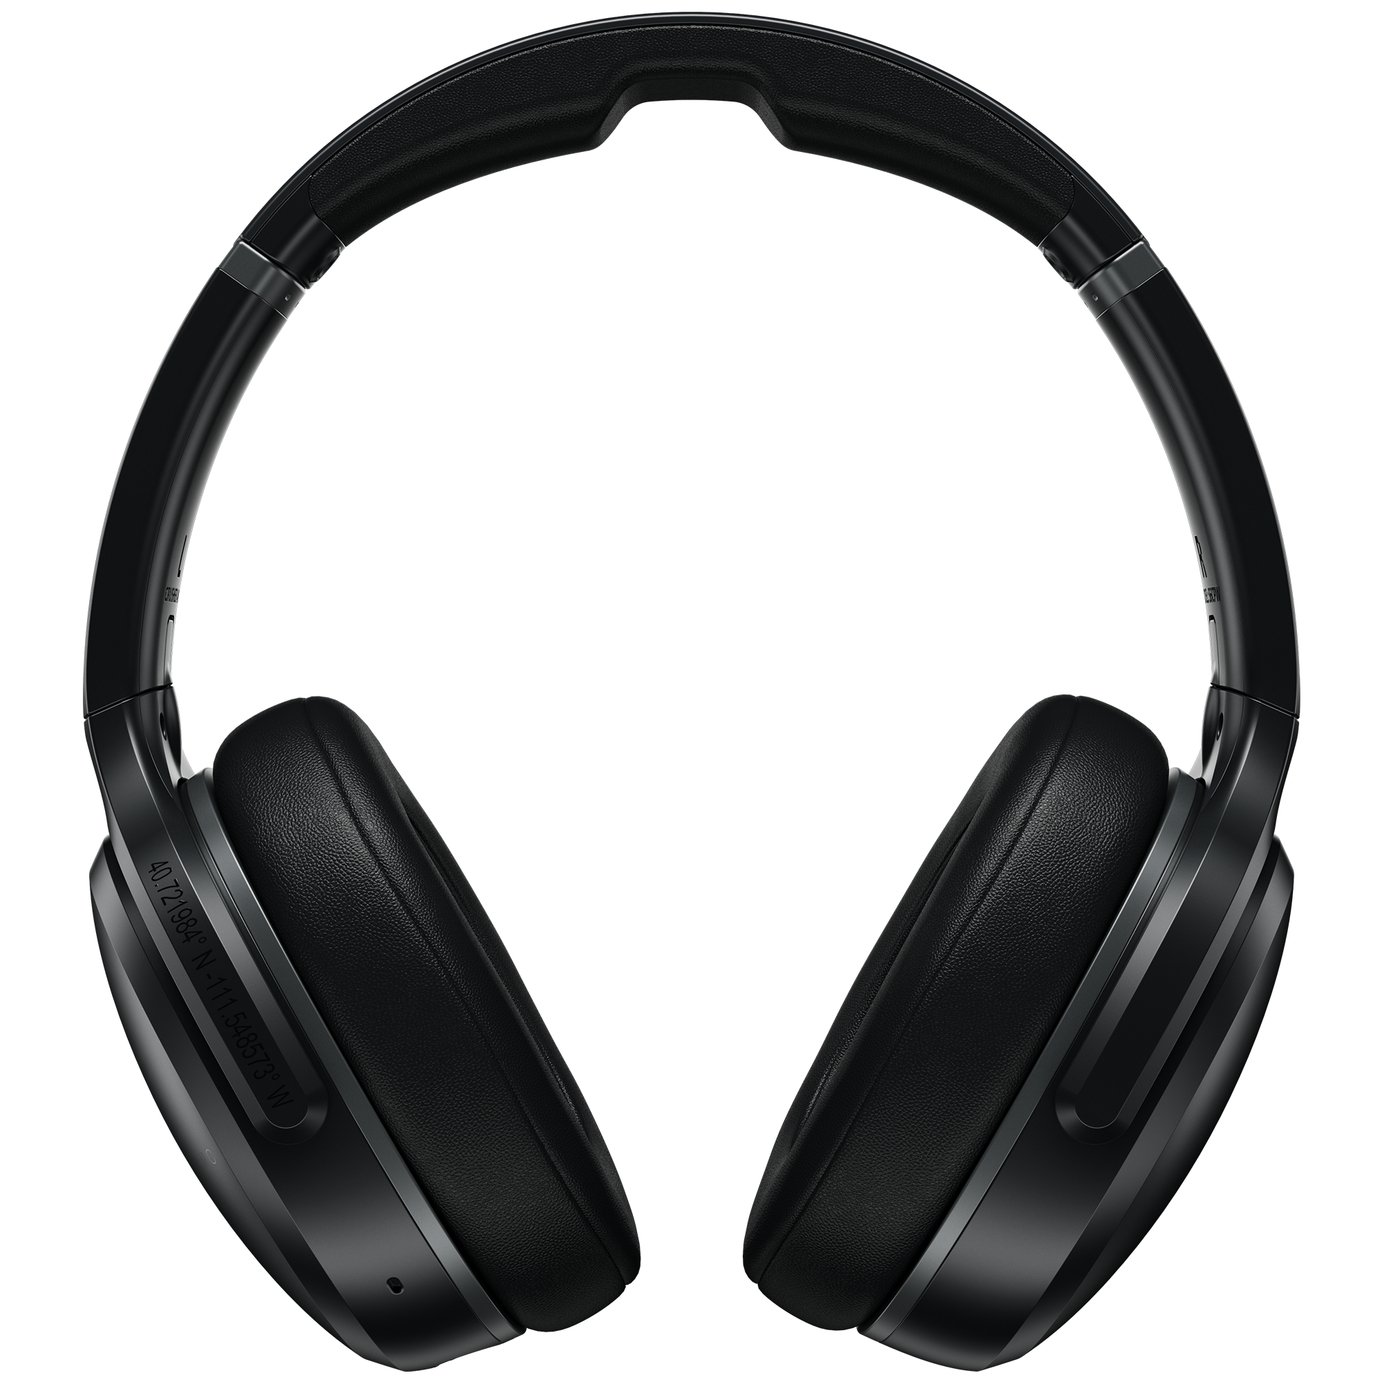 Skullcandy Crusher ANC Over-Ear Wireless Headphones Review